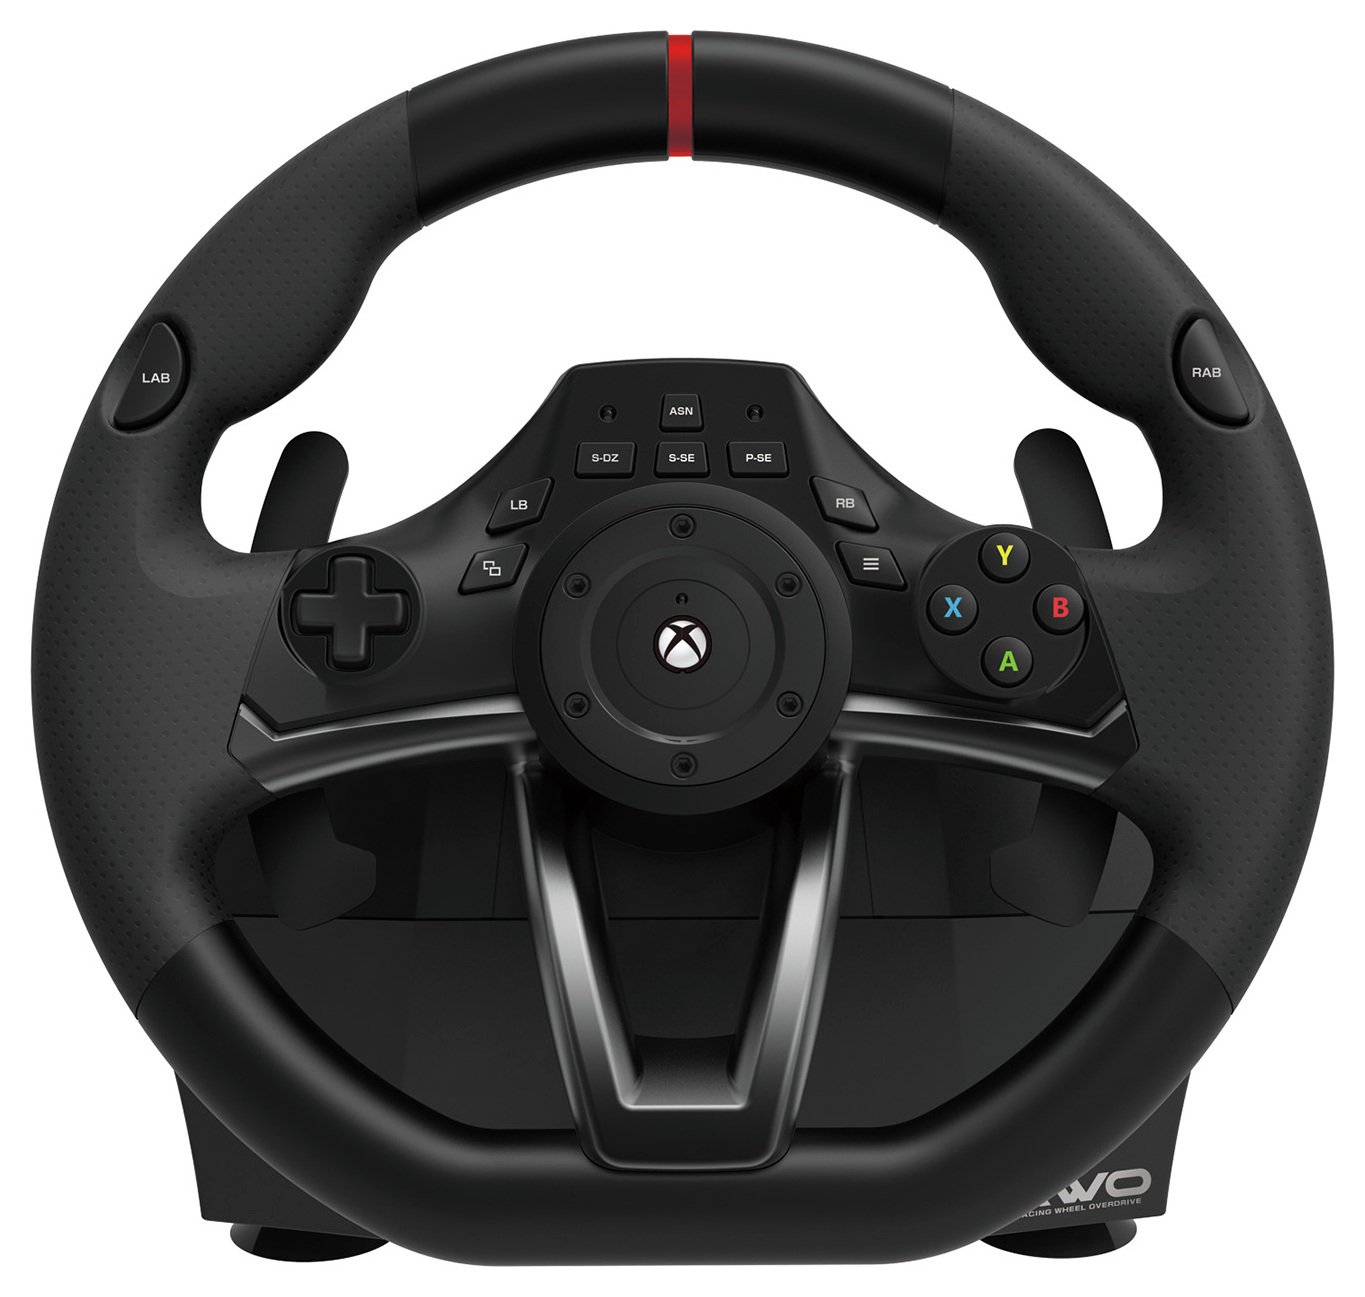 Hori Racing Wheel Xbox One Controller review